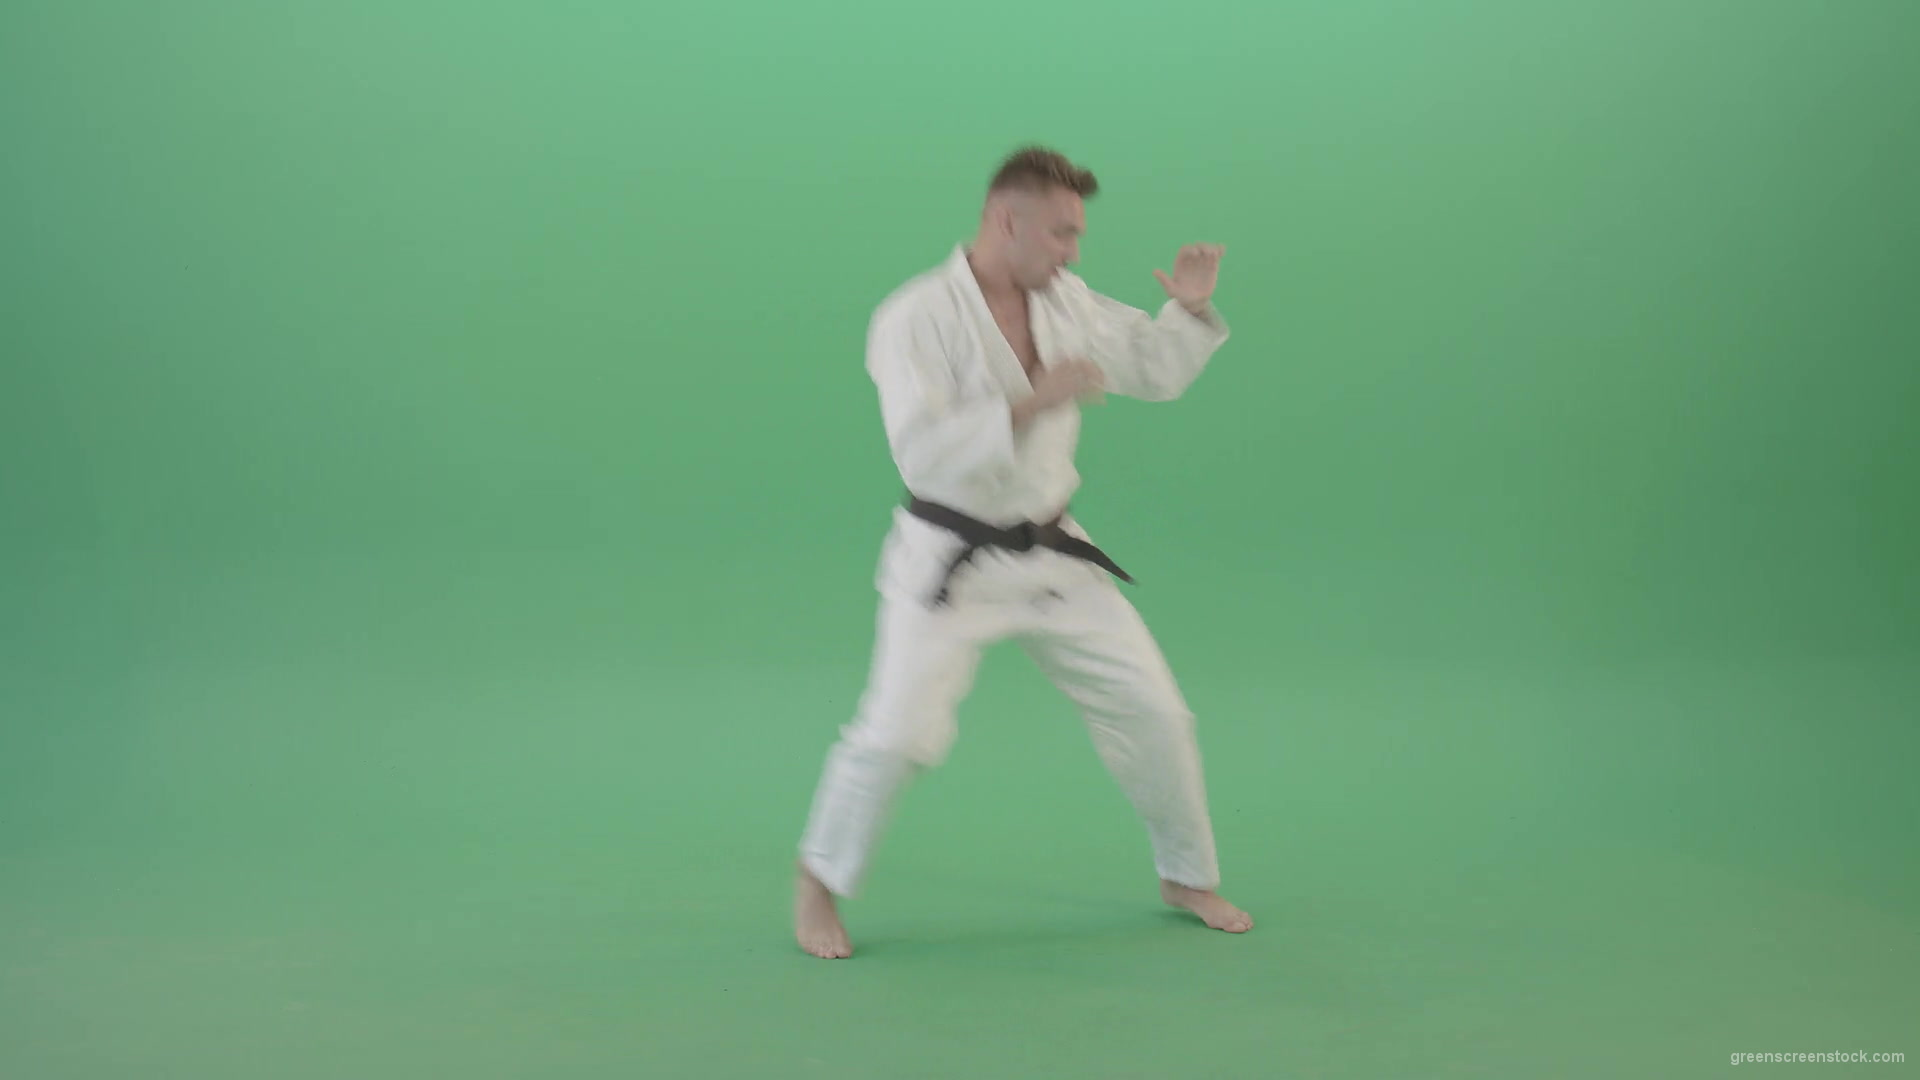 Jujutsu-Man-trianing-to-fight-combat-isolated-on-green-screen-1920_005 Green Screen Stock